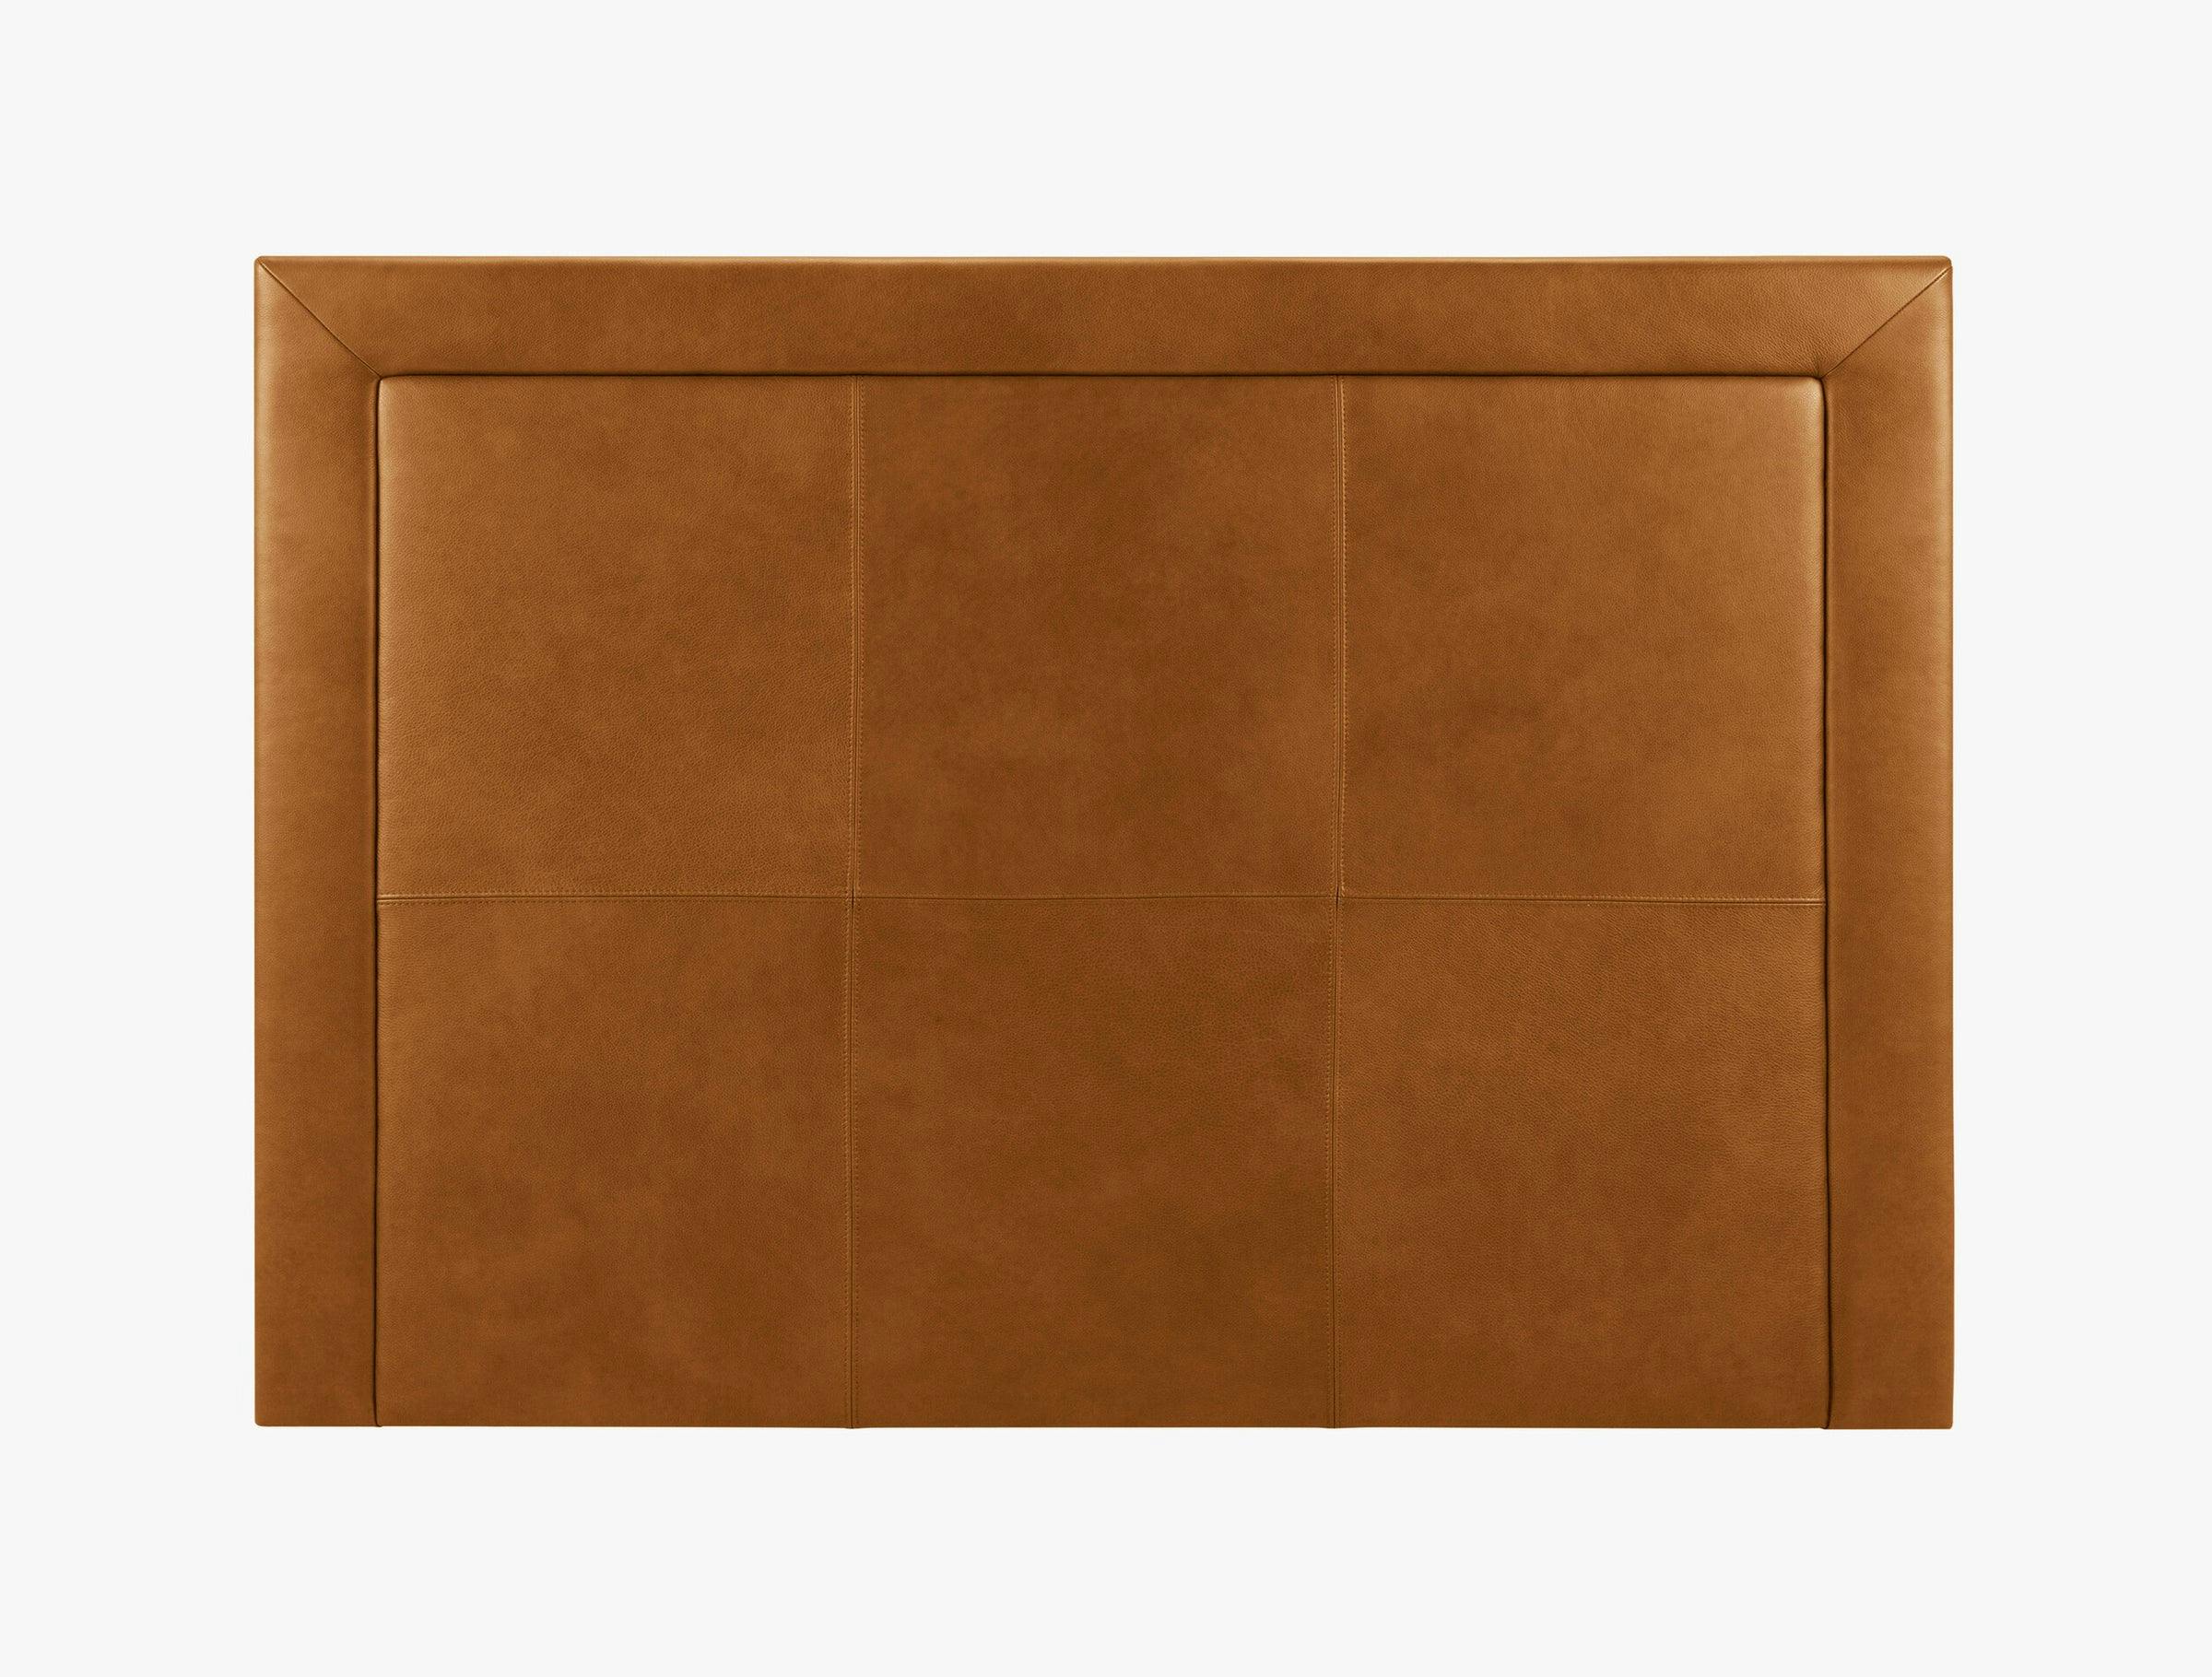 Philippe Genuine leather (Grasah) / Light brown 0